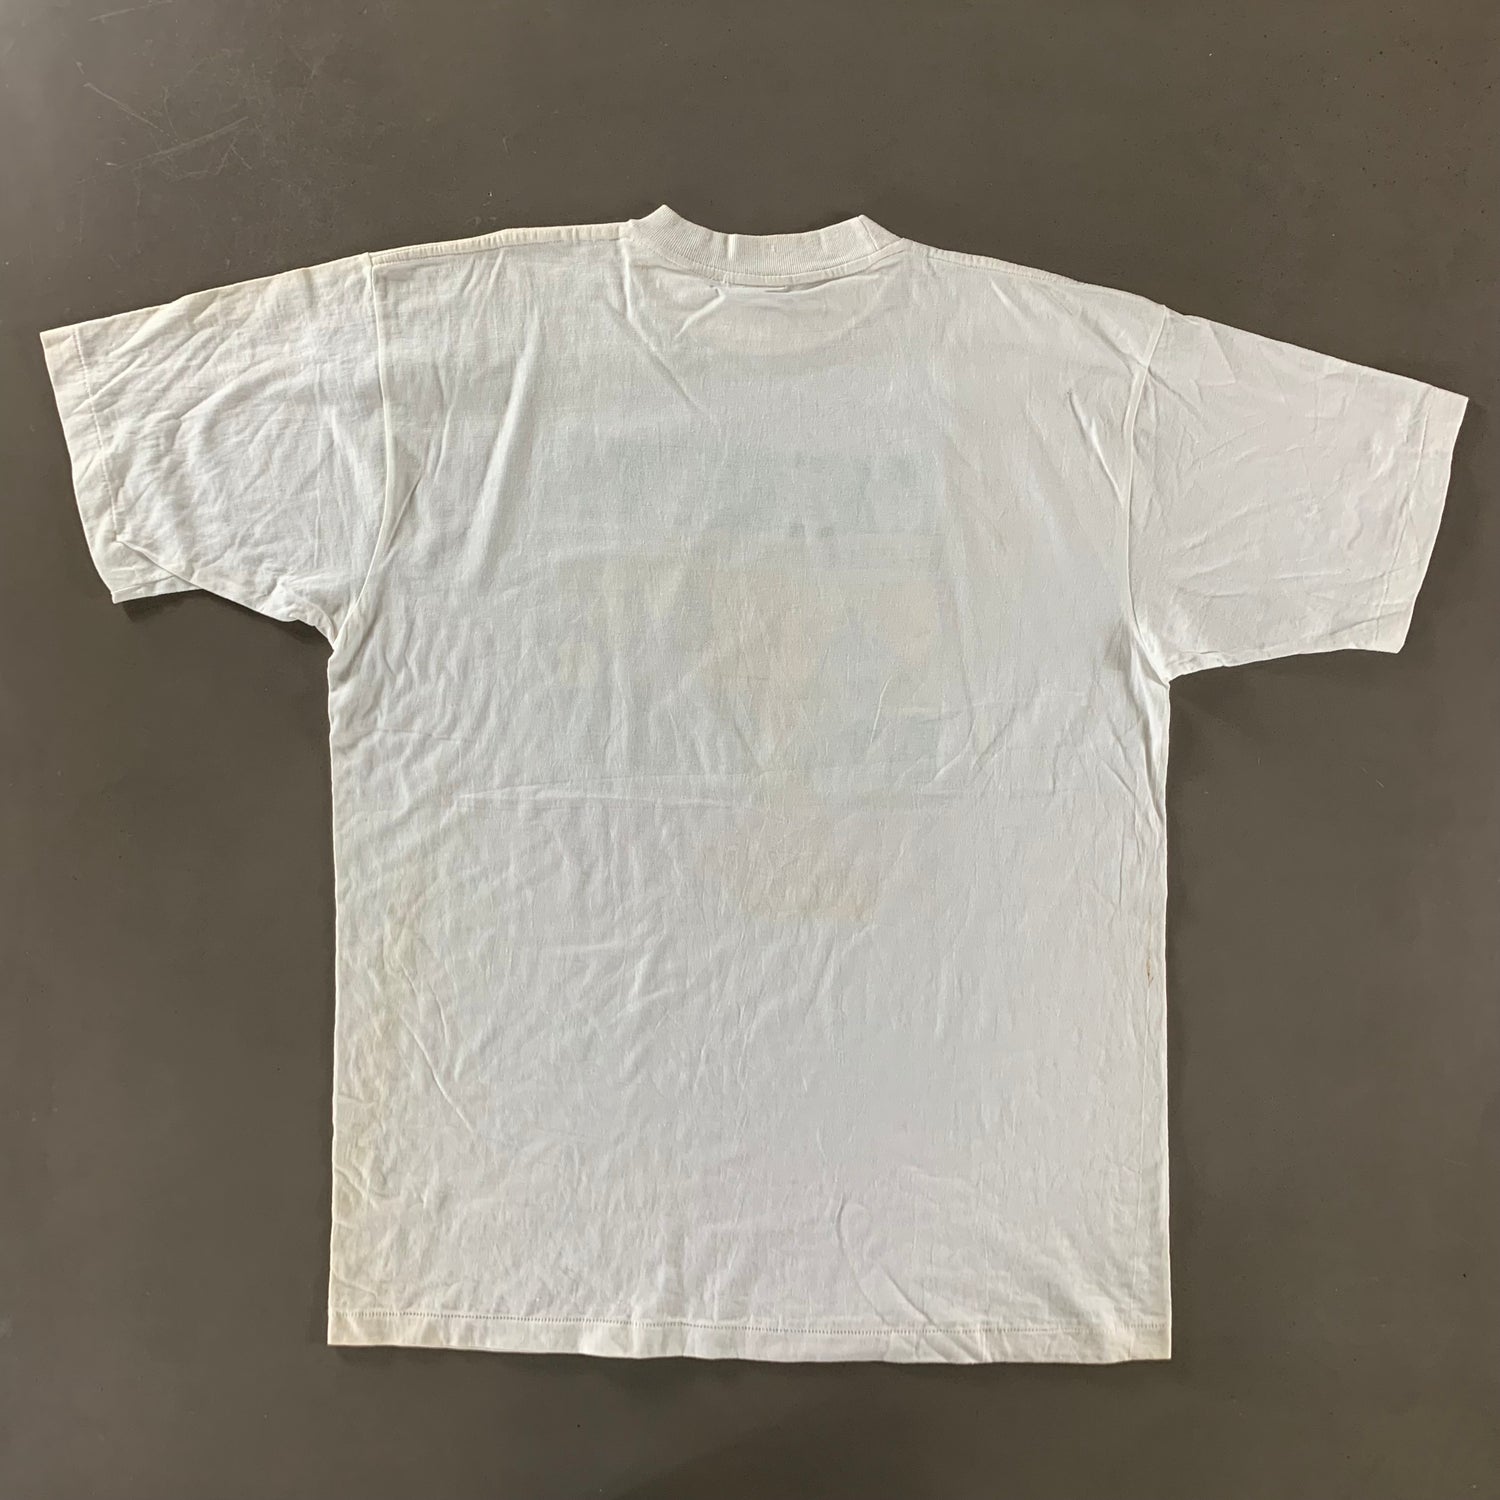 Vintage 1990s St. Maarten T-shirt size XL